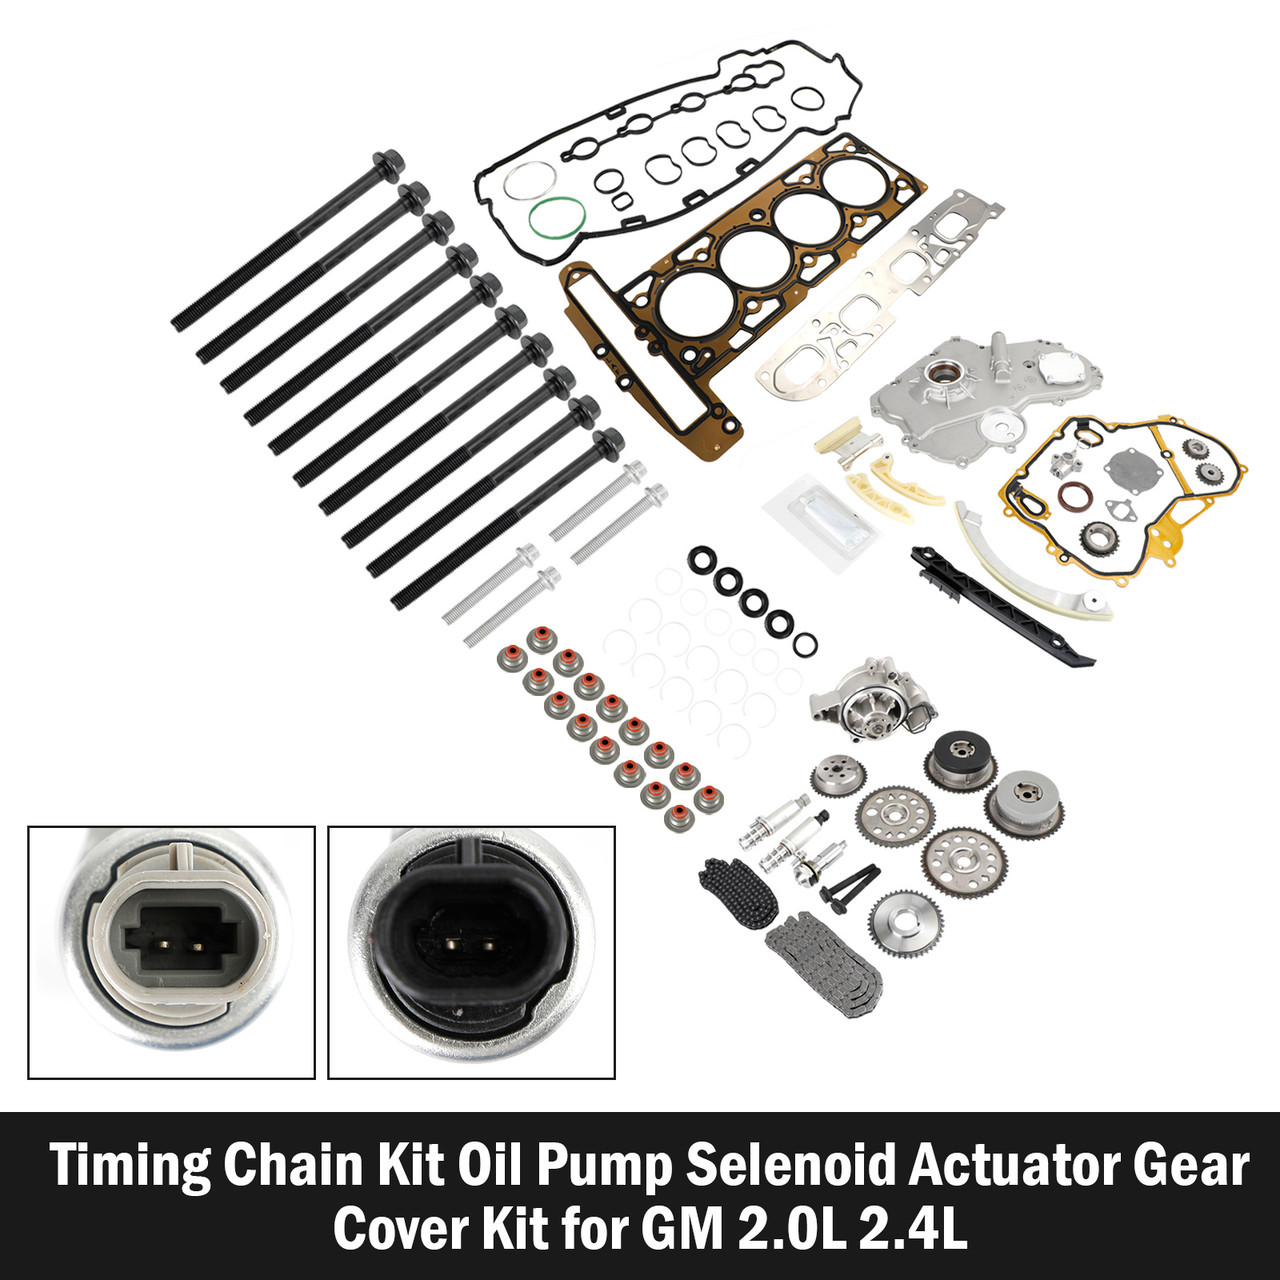 2008-2010 CHEVROLET MALIBU 2.4L Timing Chain Kit Oil Pump Selenoid Actuator Gear Cover Kit